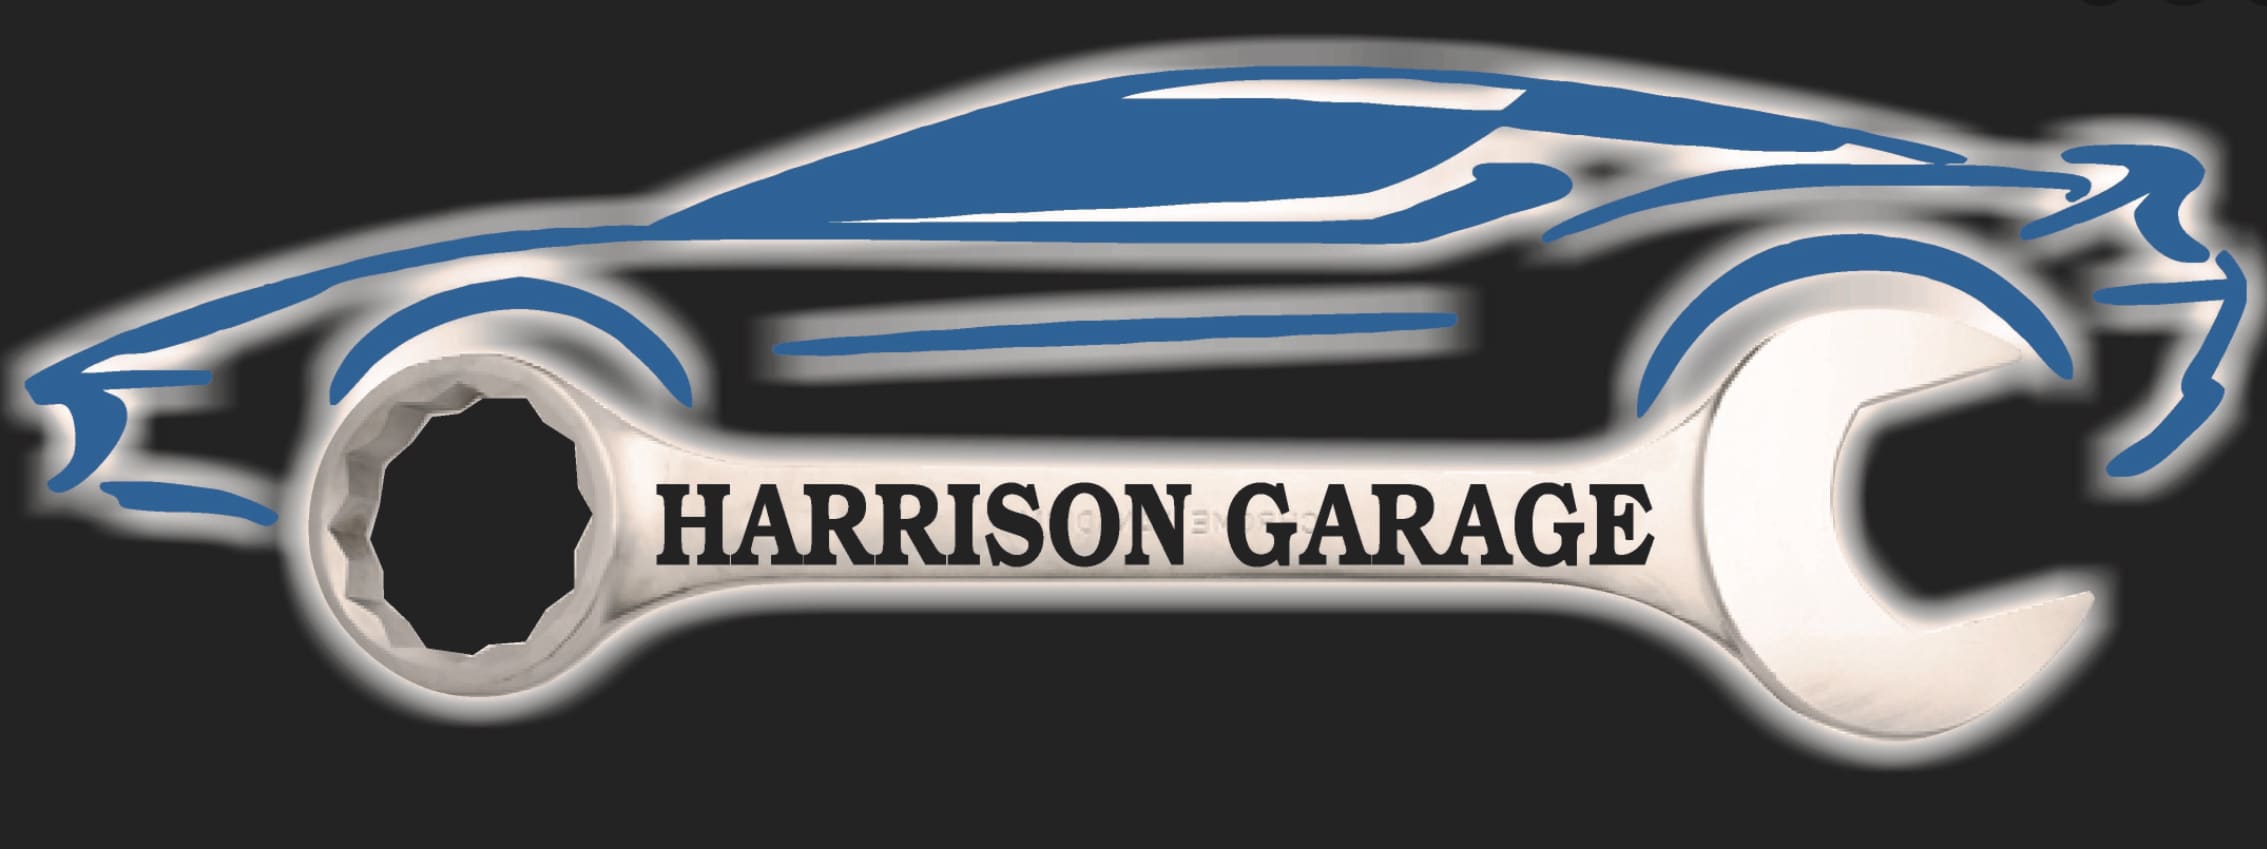 Harrison Garage Hull